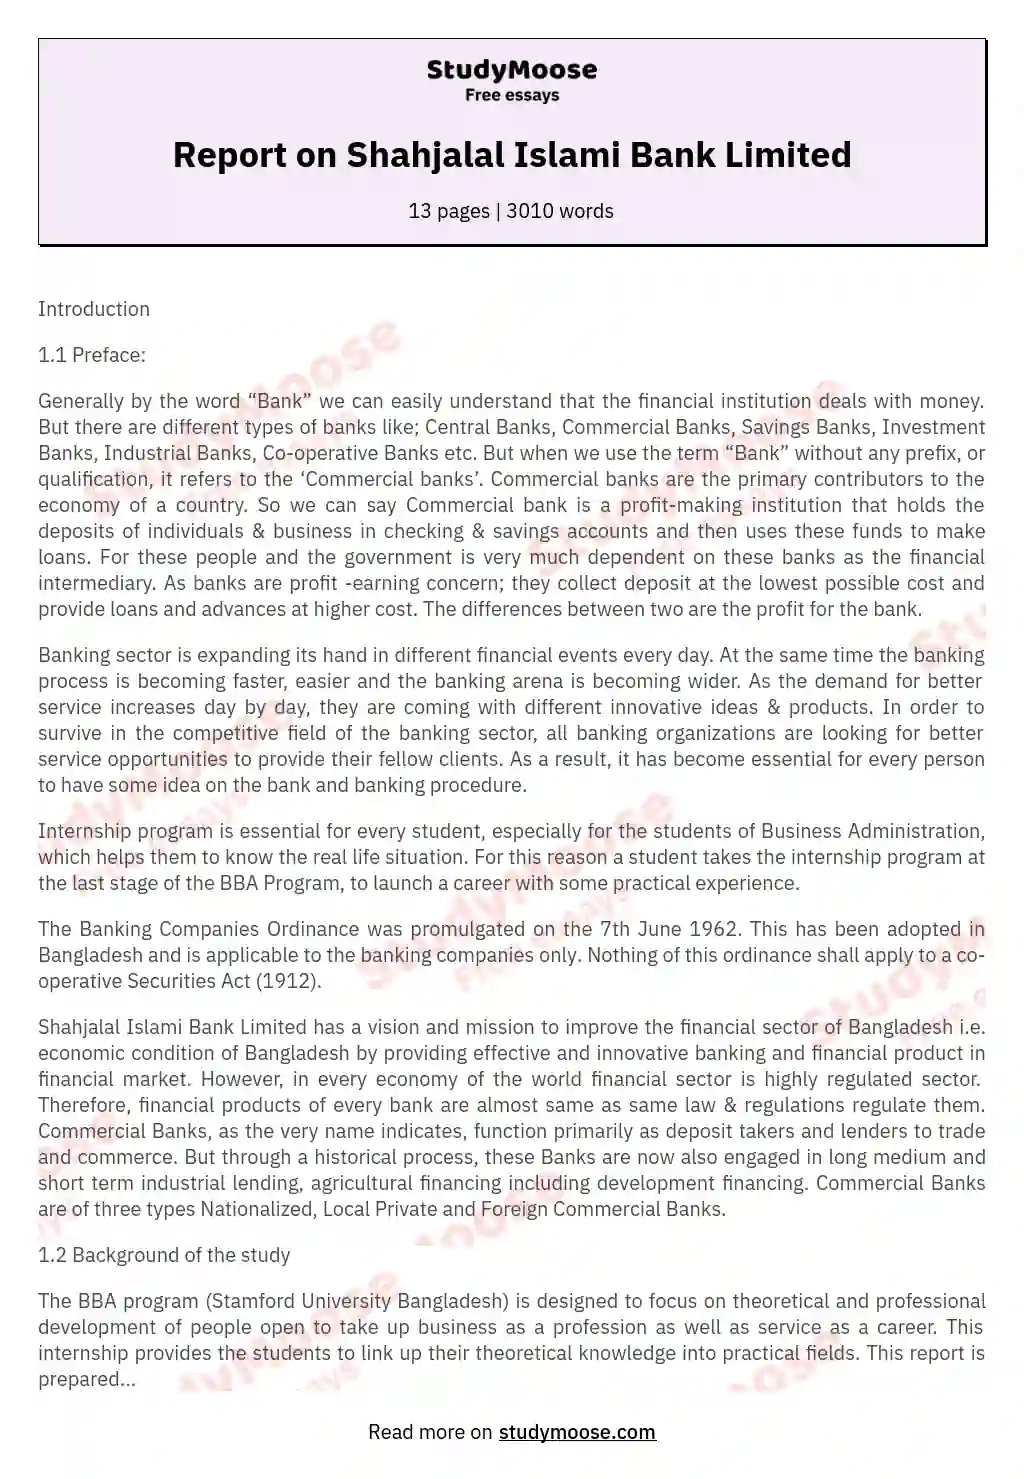 Report on Shahjalal Islami Bank Limited essay